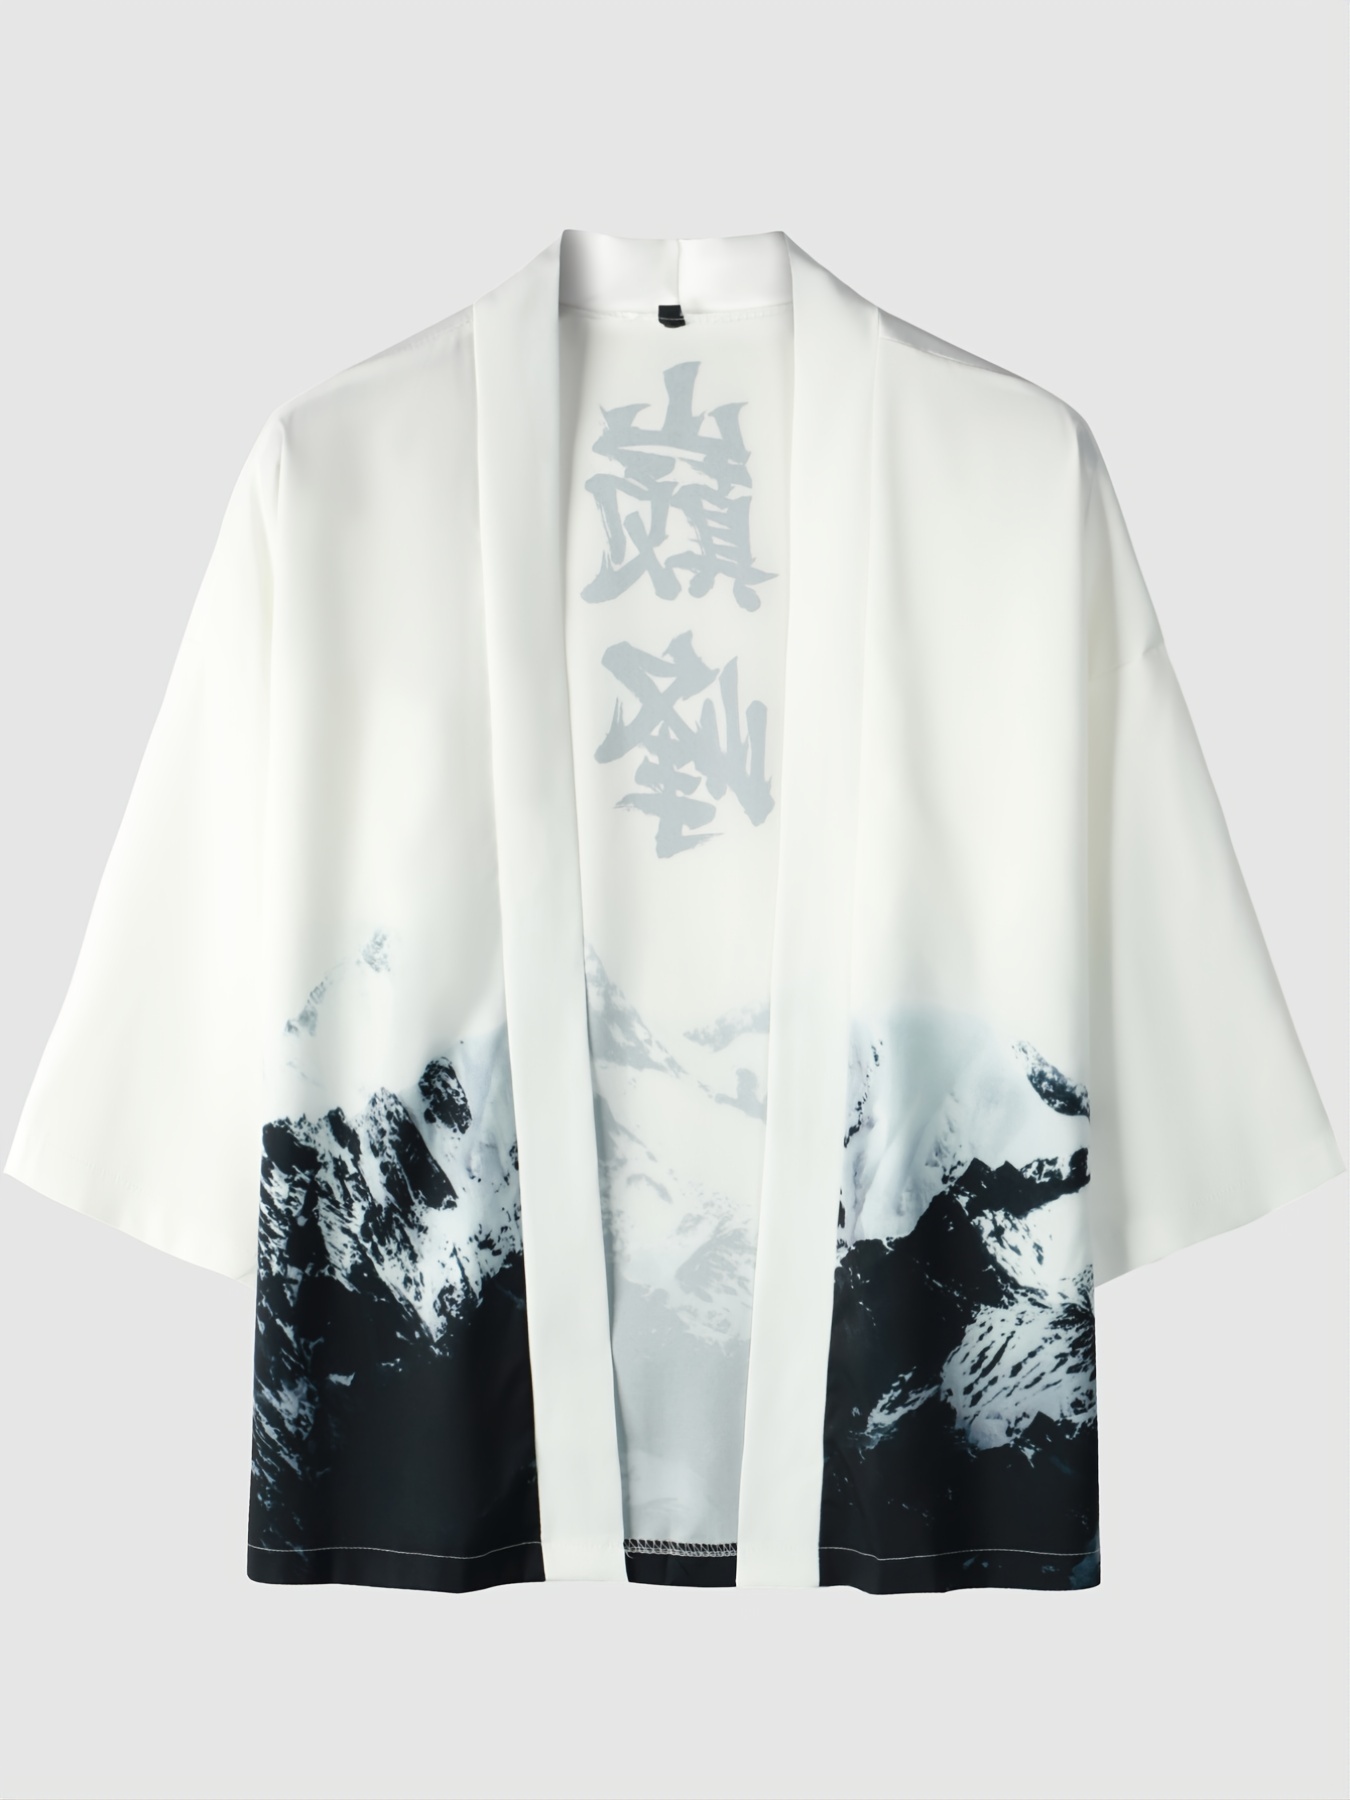 Conjunto Kimono Japonés Hombre Camisa Estampado Estilo Chino - Temu Mexico